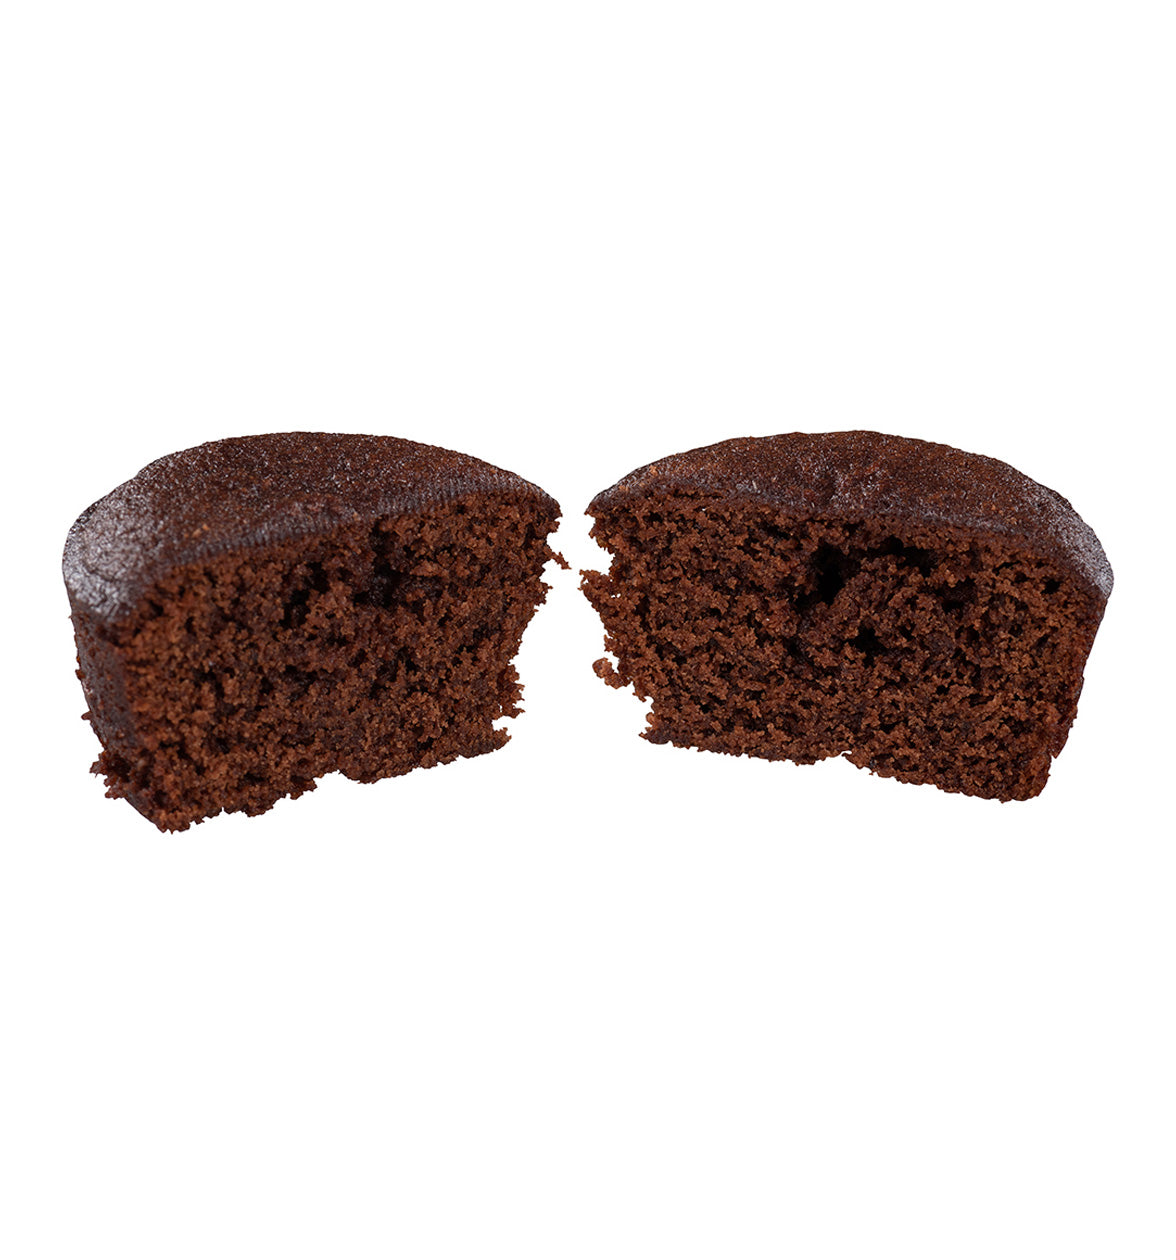 Chocolate Brownies 2:1